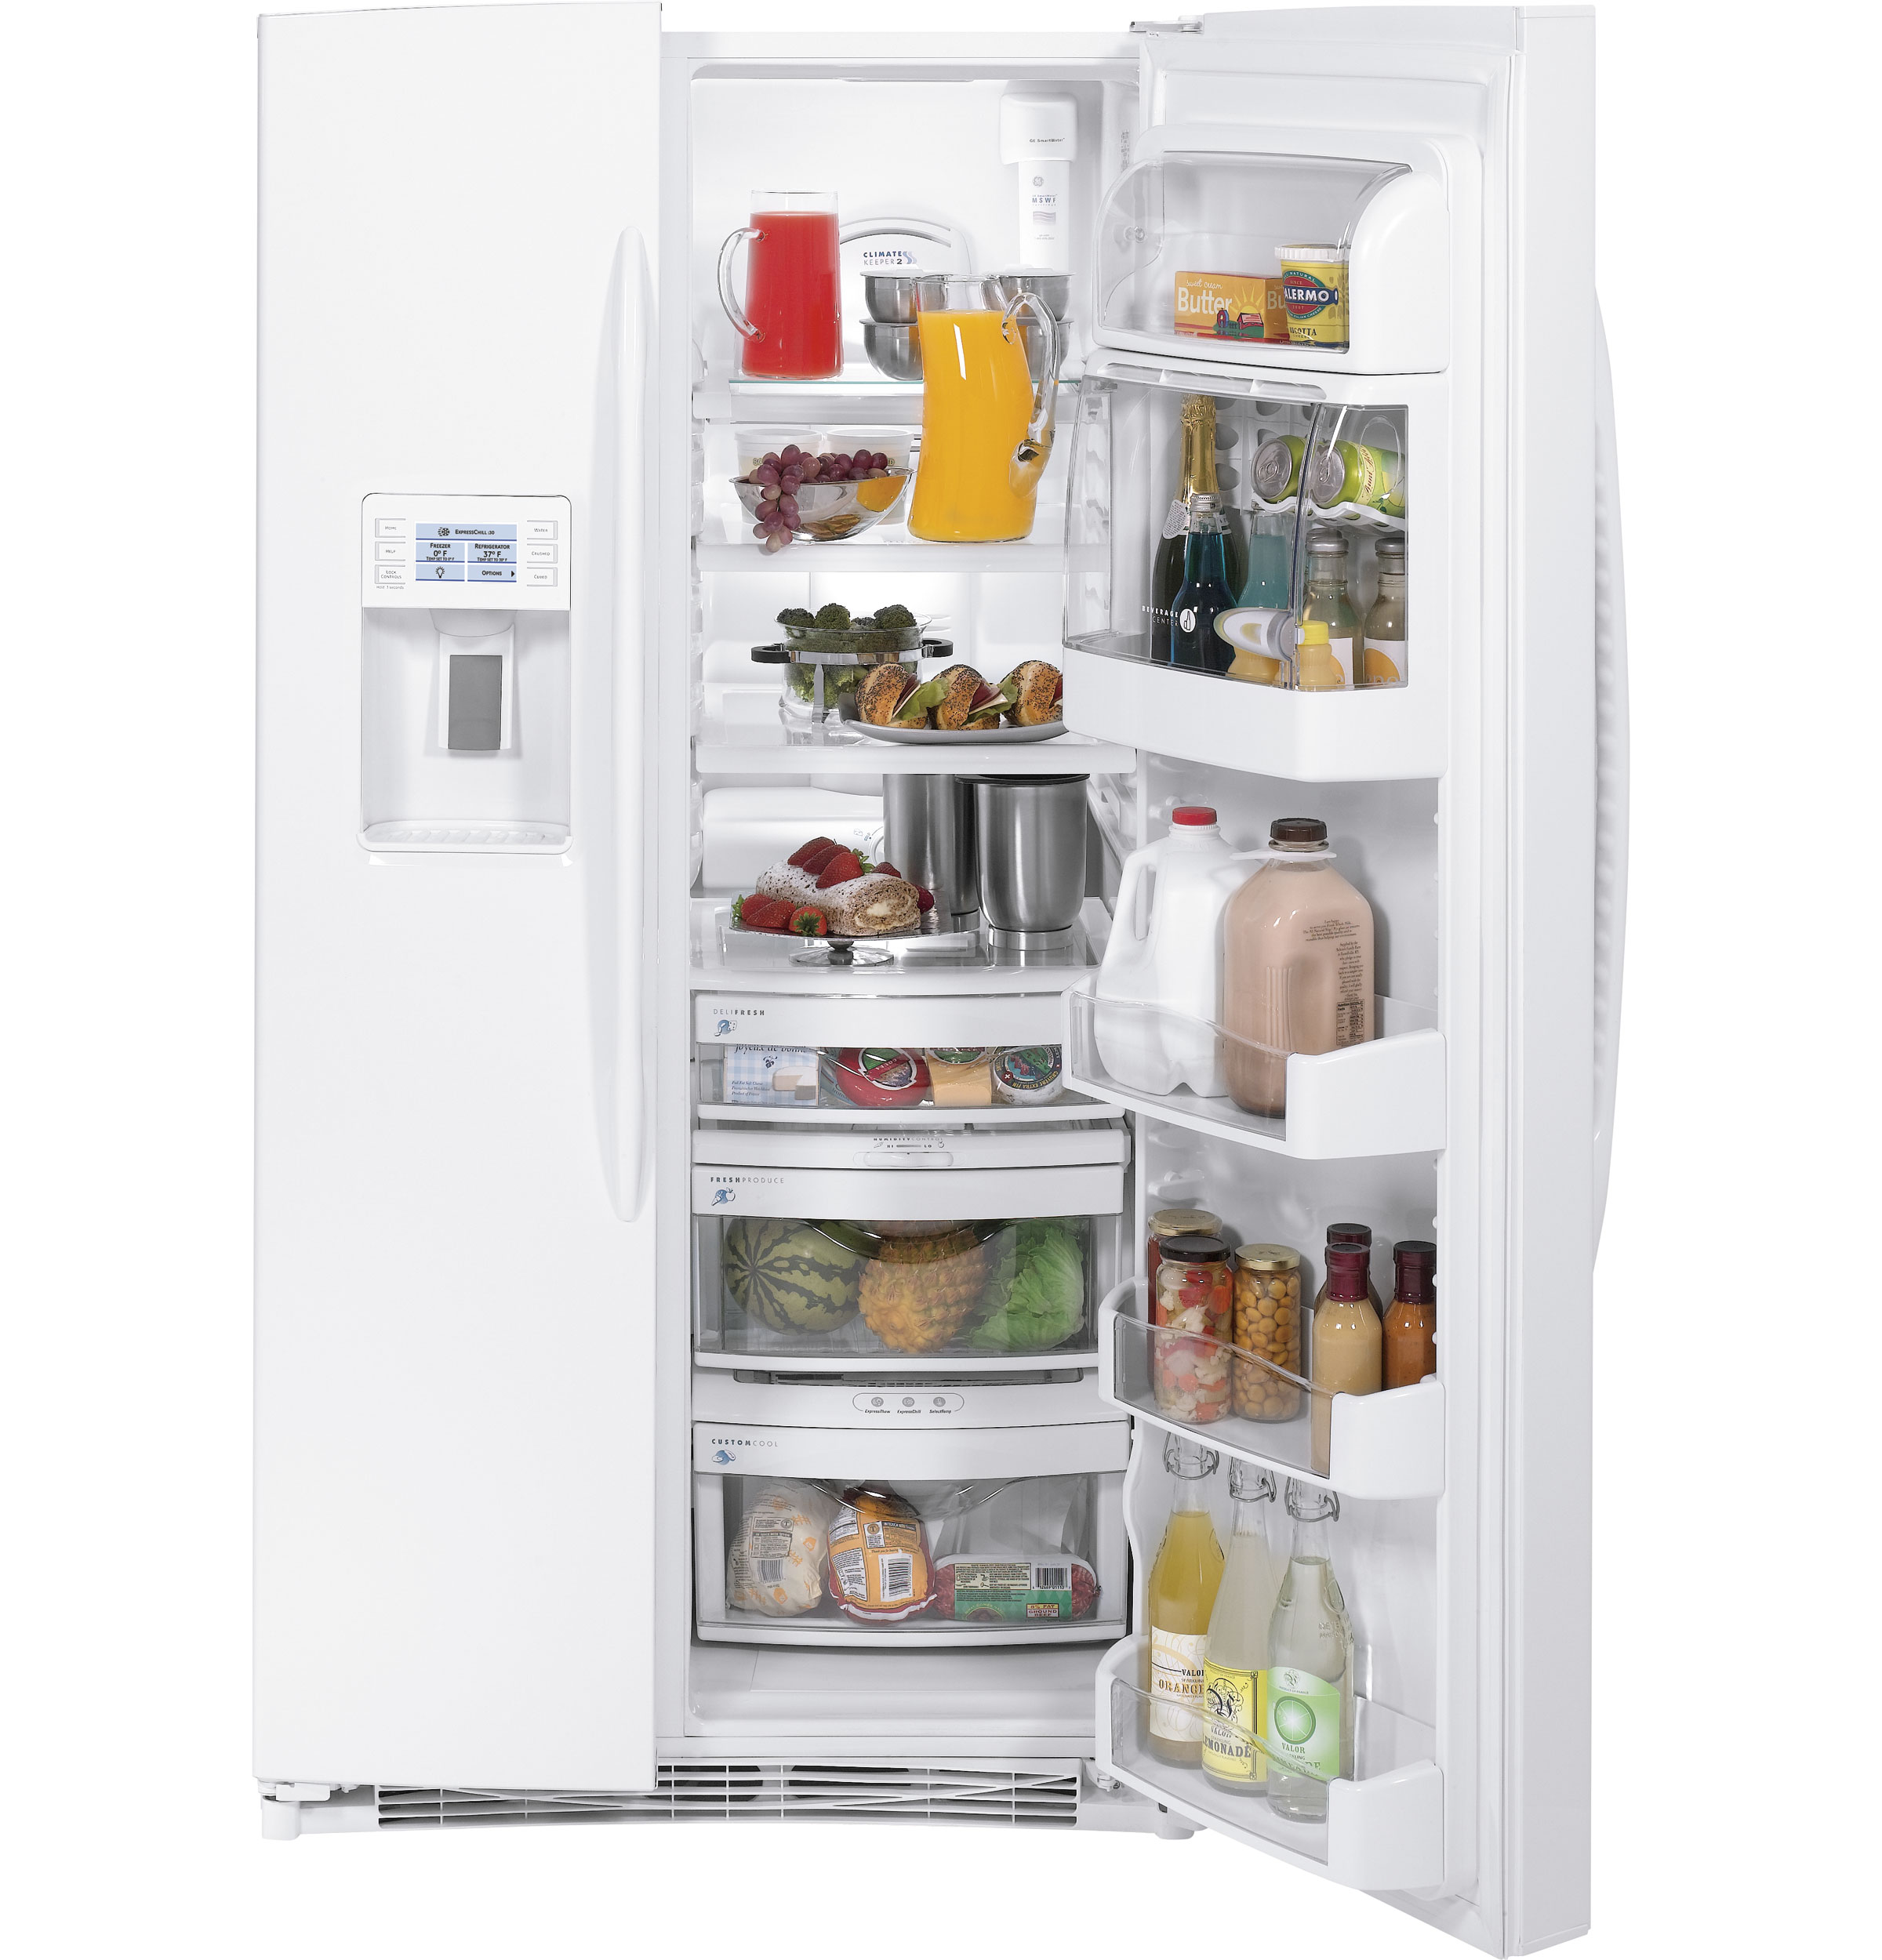 GE Profile™ ENERGY STAR® 25.6 Cu. Ft. Side-by-Side Refrigerator